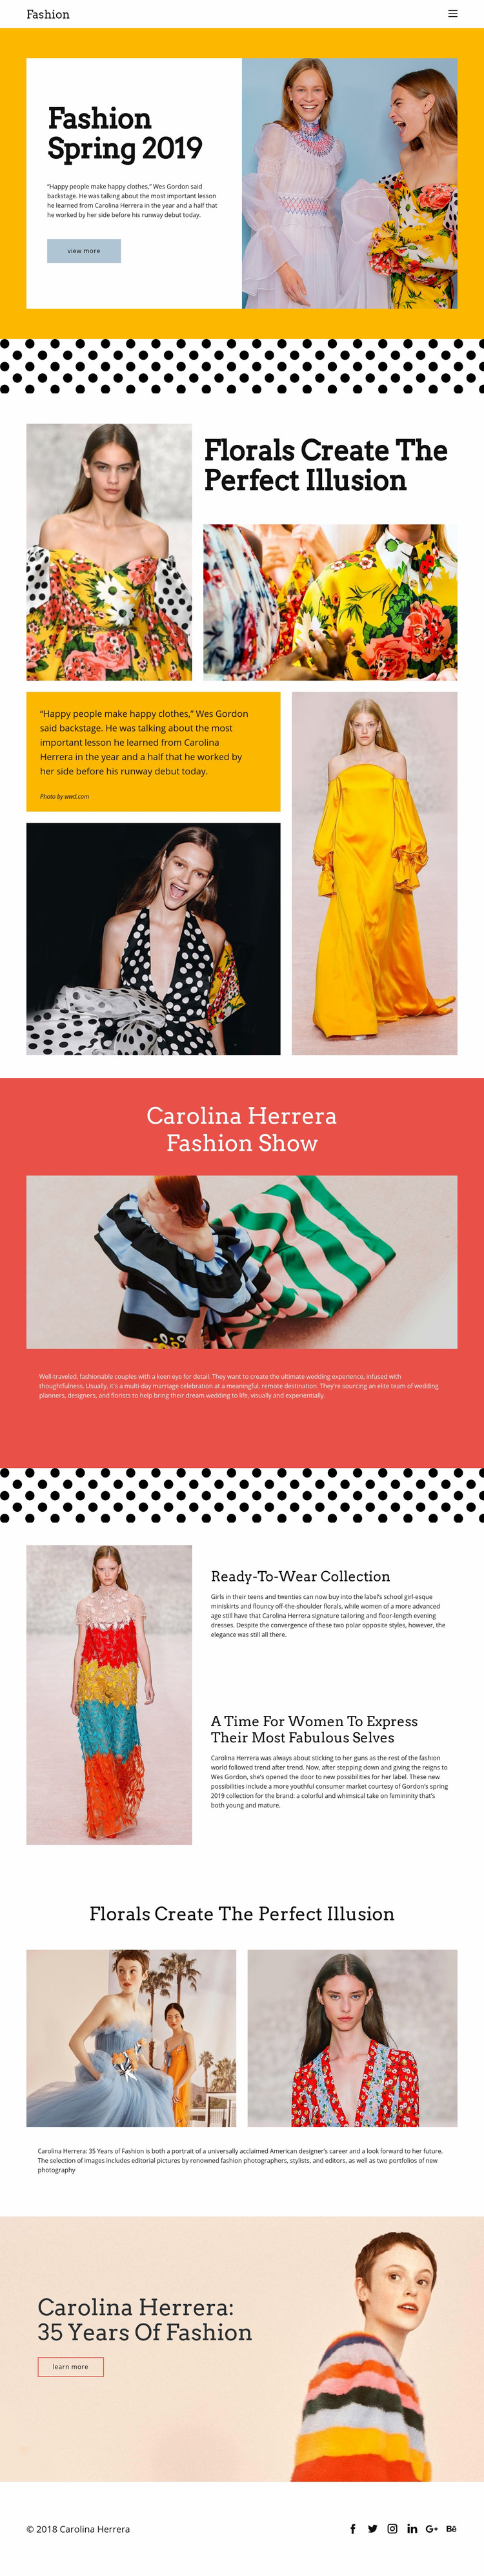 Fashion Spring Web Page Design